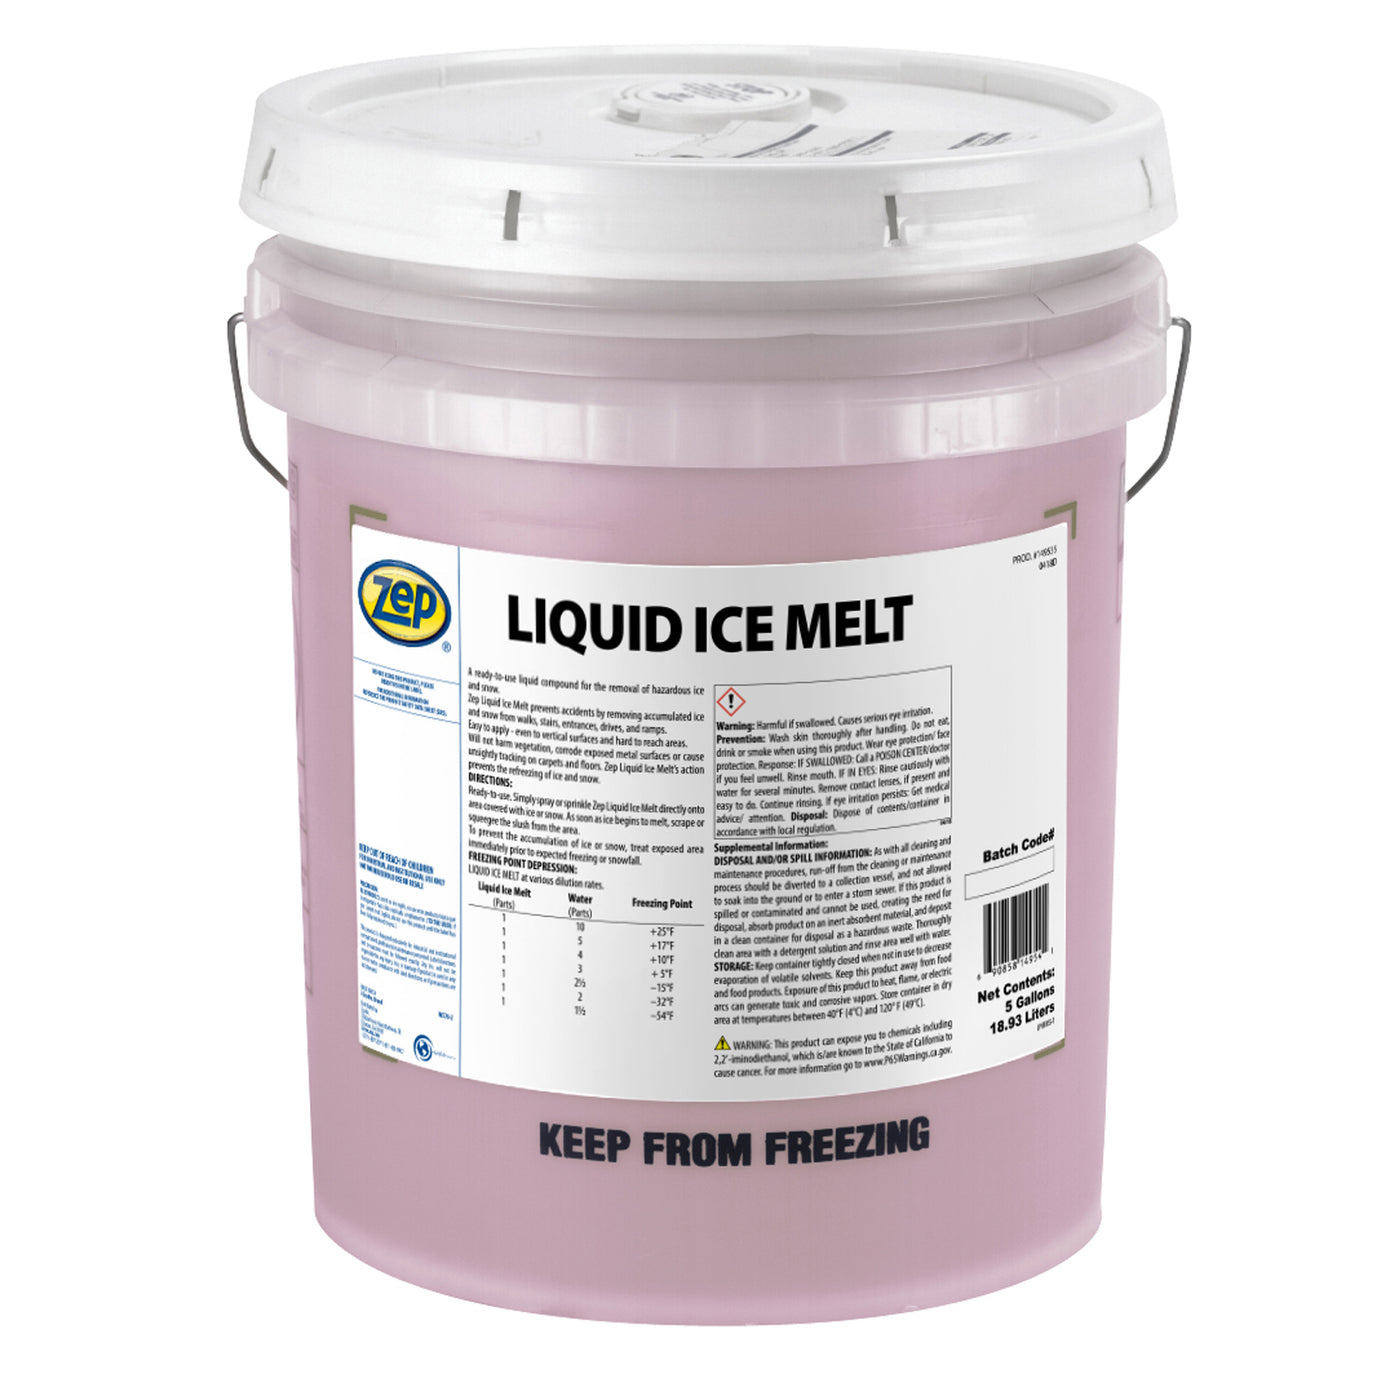 Liquid Ice Melt Ice Melting Compound 5 Gallon Pail